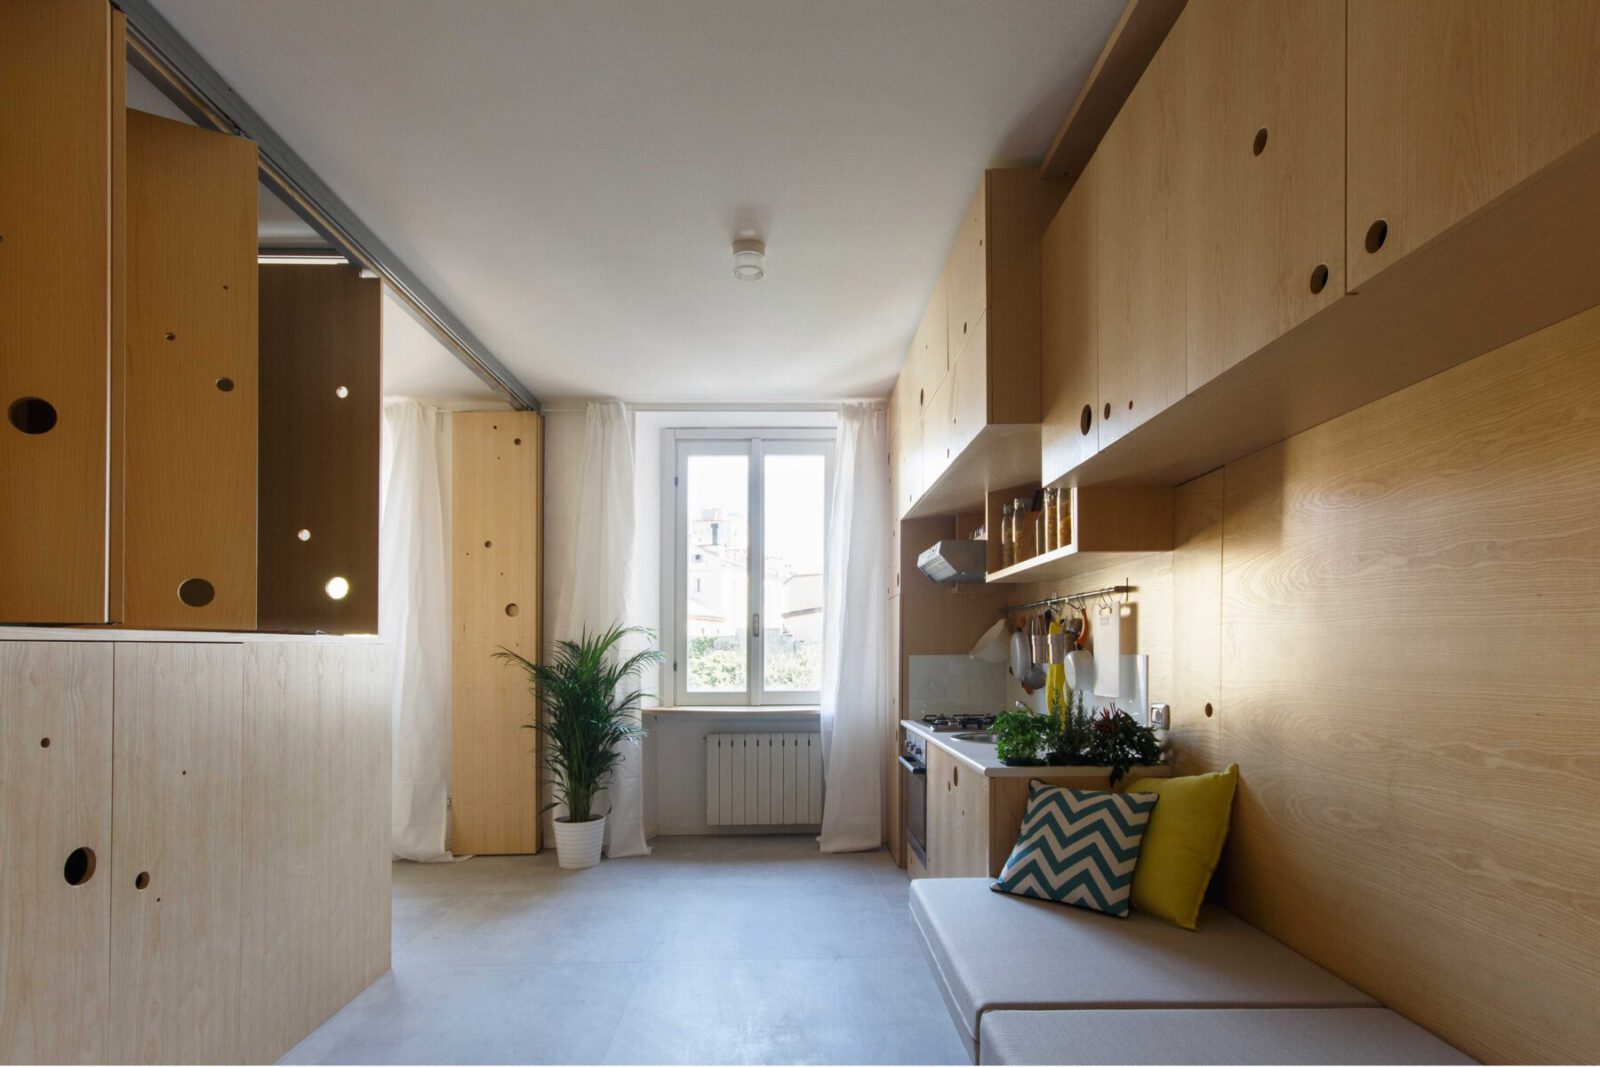 Archisearch BRERA apartment in Milan, Italy | ATOMAA